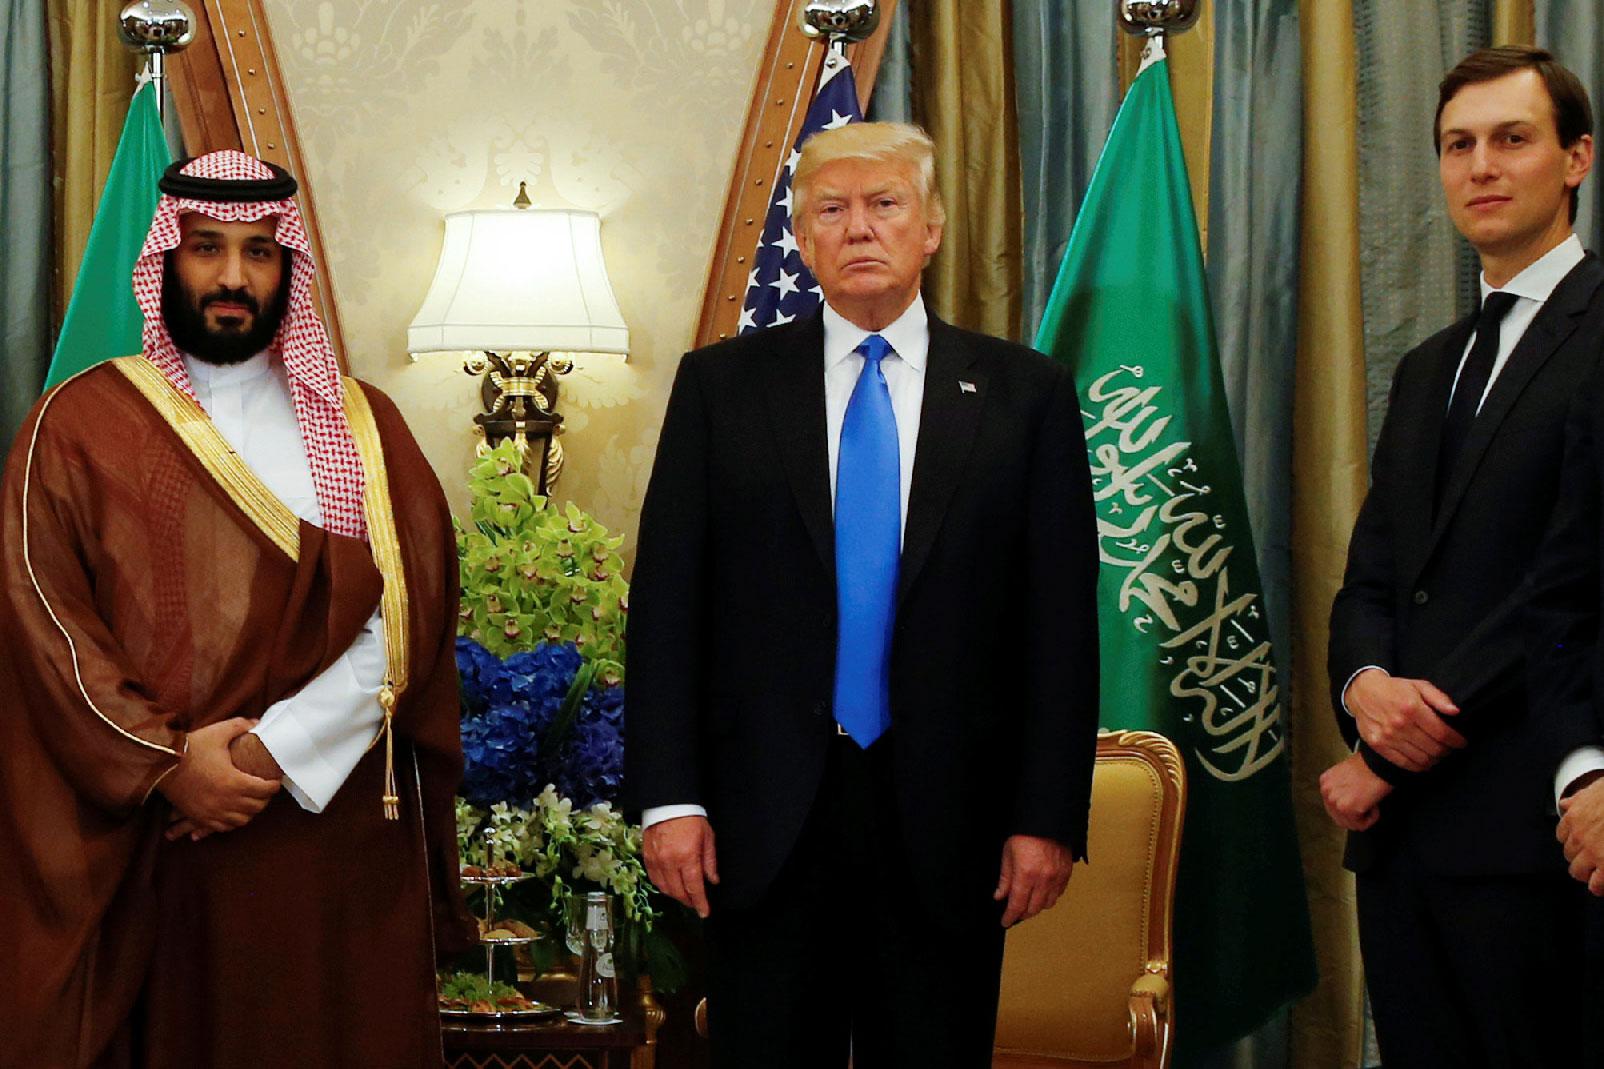 US President Donald Trump, flanked by White House senior advisor Jared Kushner, meets with Saudi Arabia's Deputy Crown Prince Mohammed bin Salman at the Ritz Carlton Hotel in Riyadh.